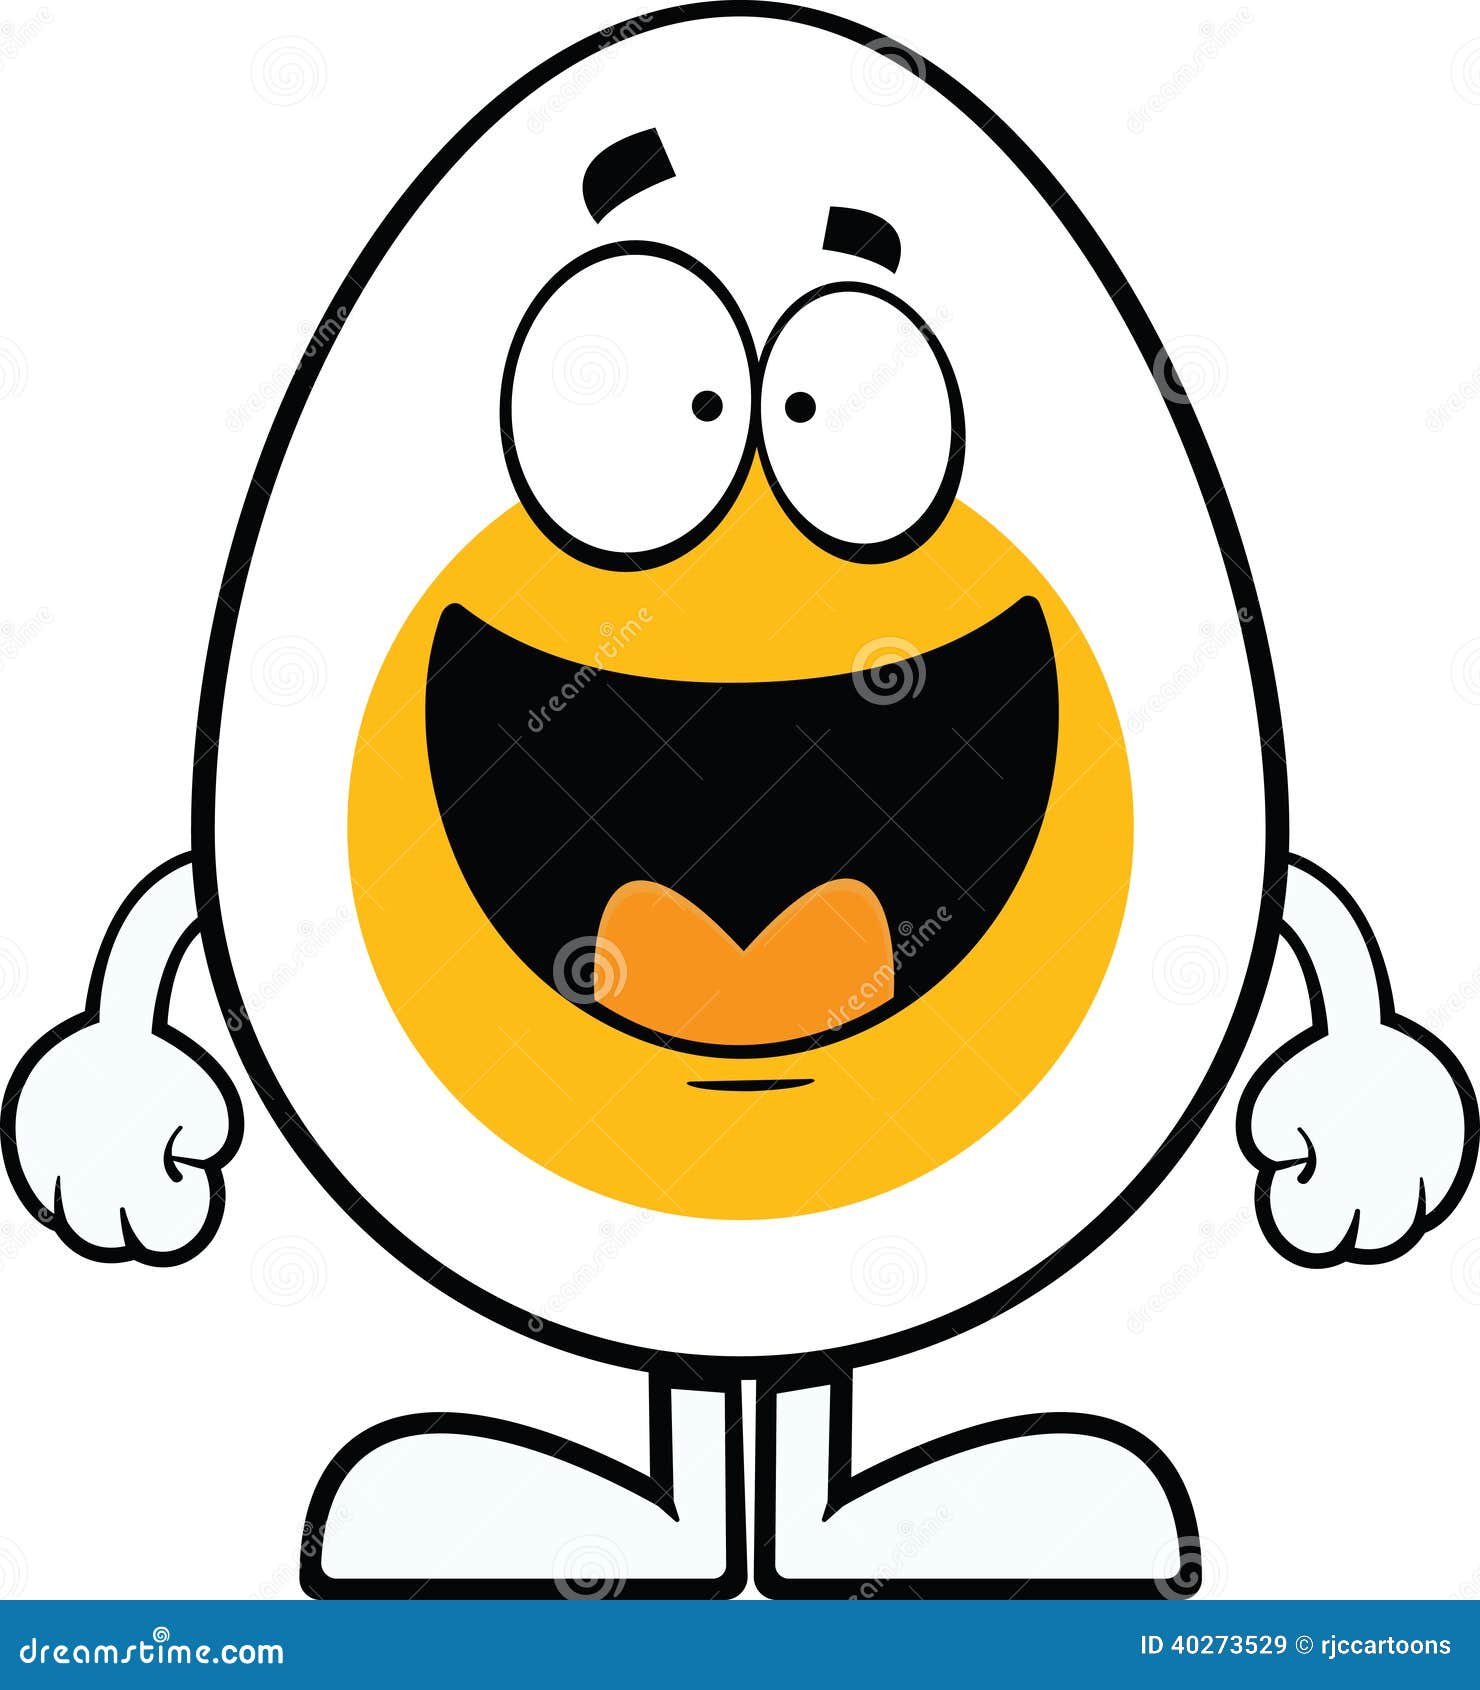 Happy Cartoon Egg stock vector. Illustration of happy - 40273529